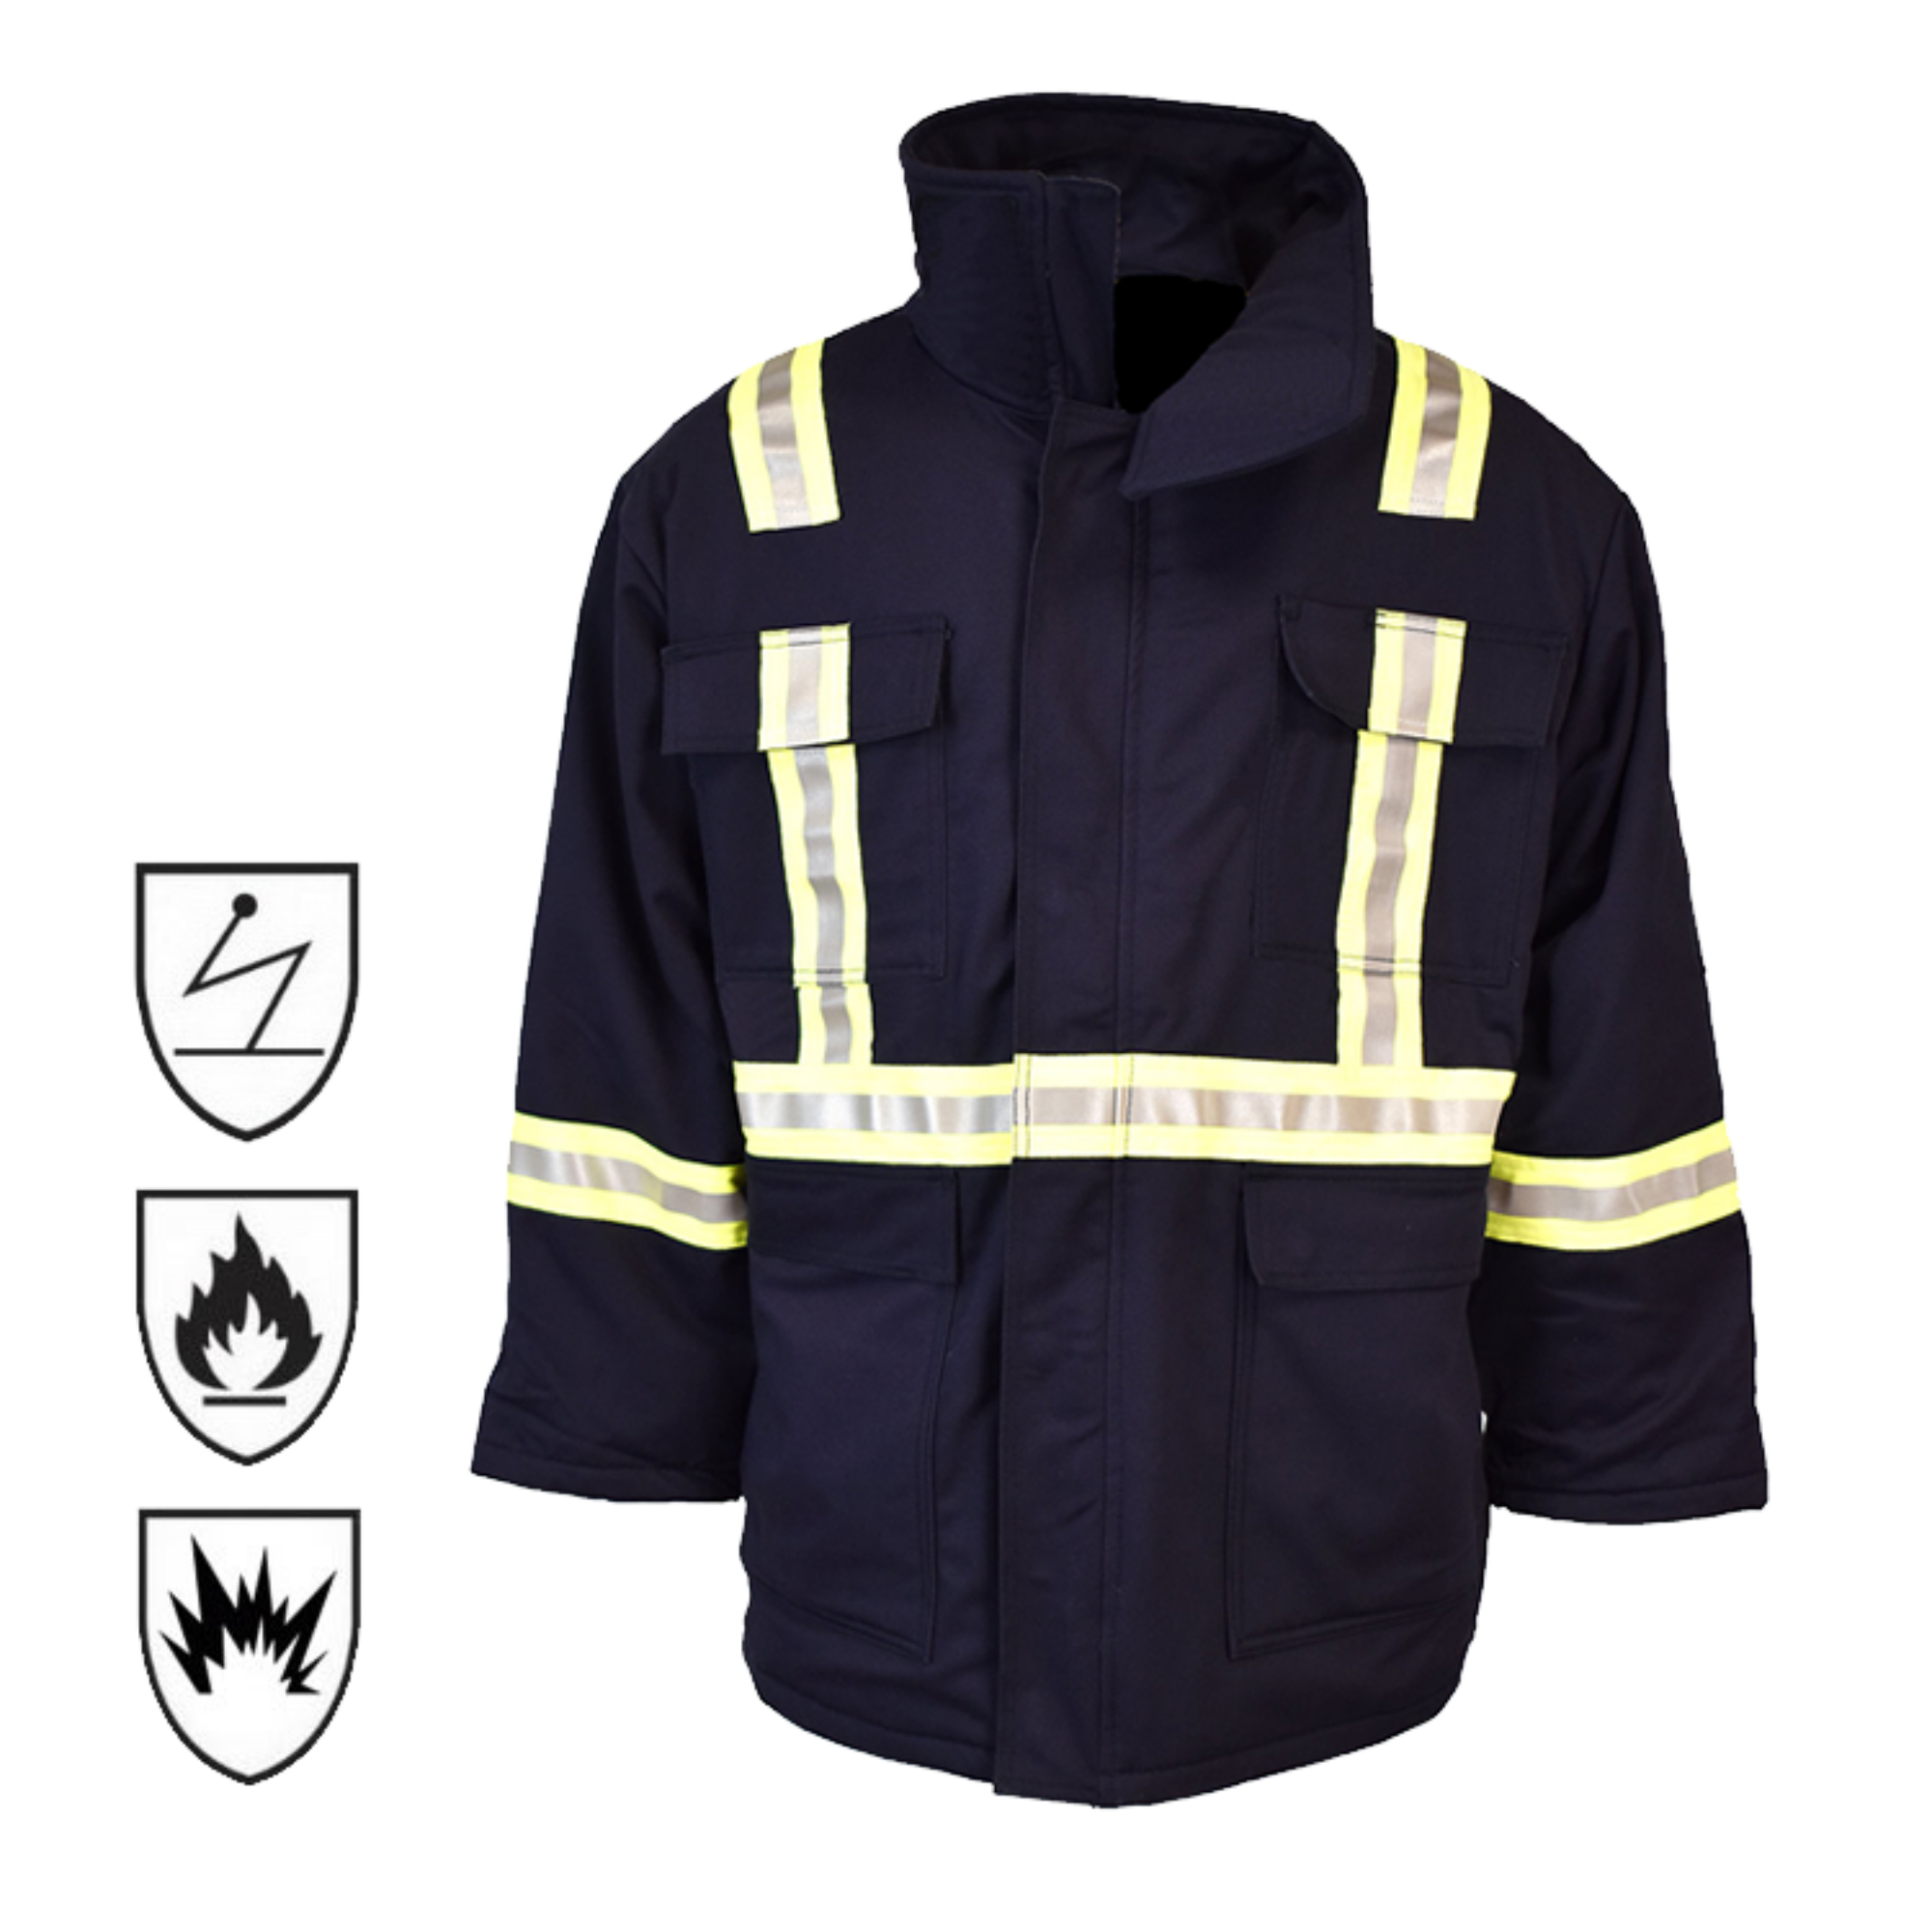 Premium Protect FRC FR Fire Retardant Nomex Inherent Shirts Hi Vis Reflective Jacket